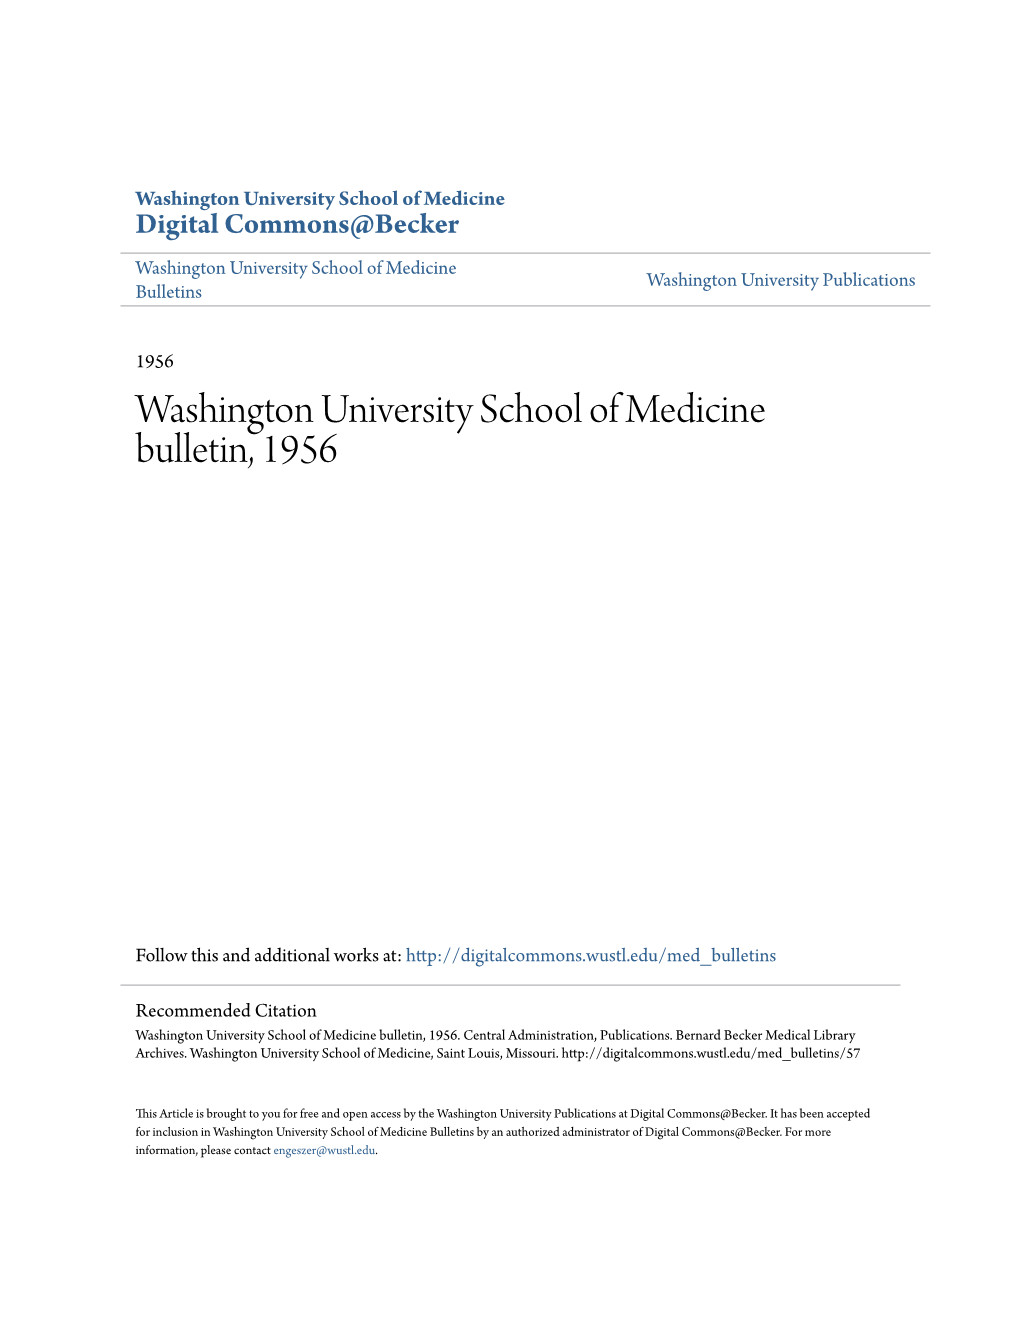 Washington University School of Medicine Bulletin, 1956